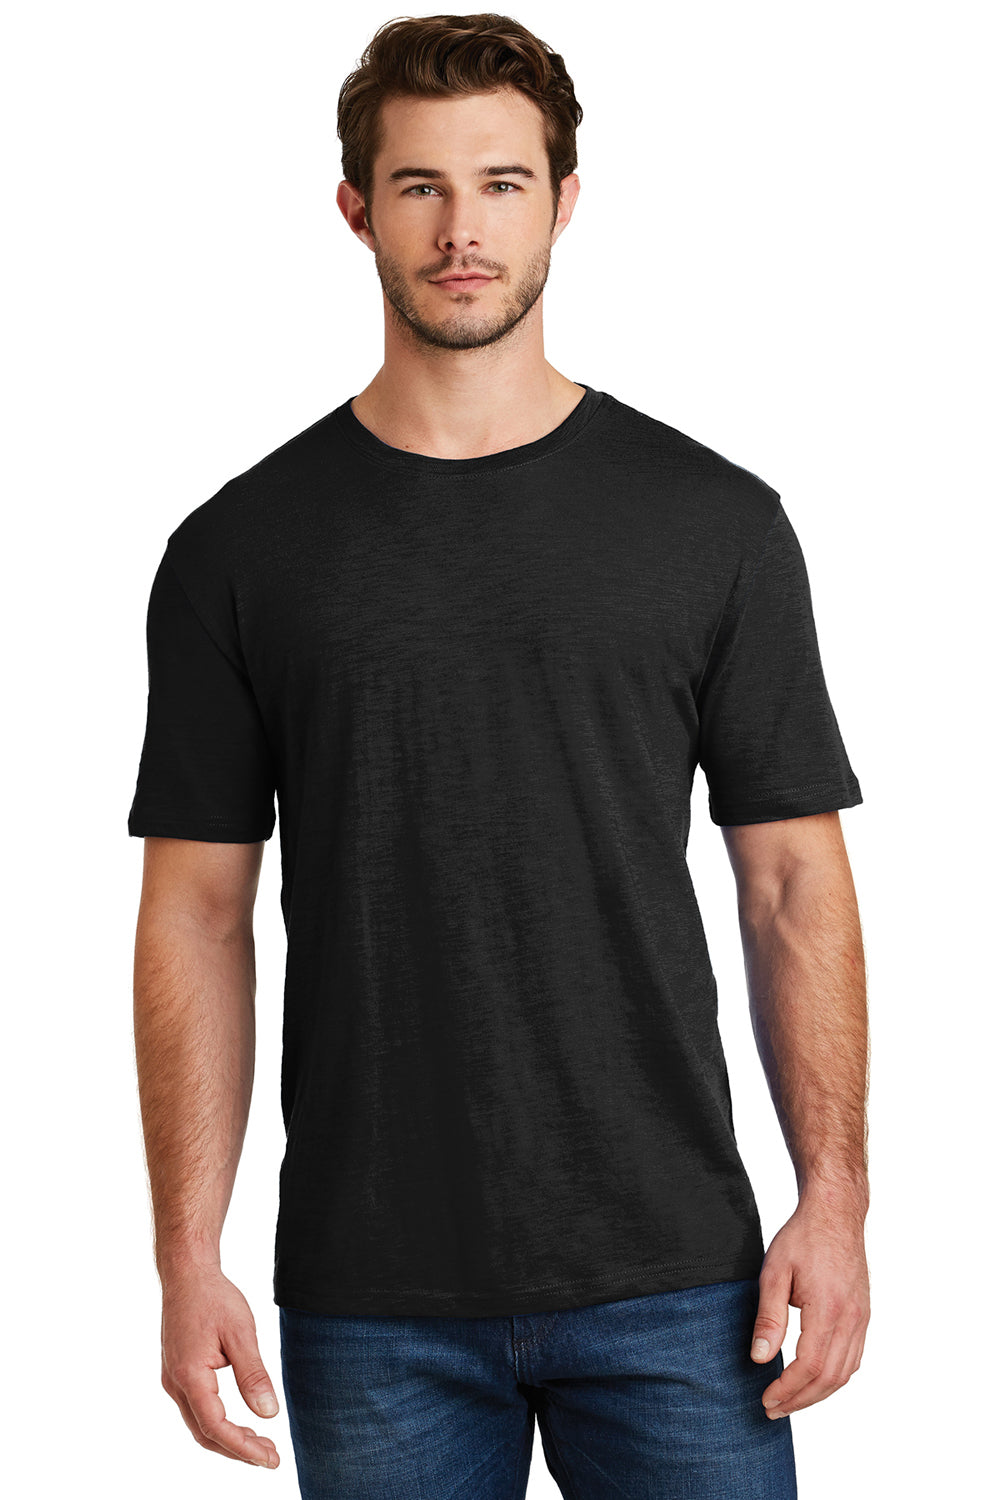 District DM3000 Mens Super Slub Short Sleeve Crewneck T-Shirt Black Front